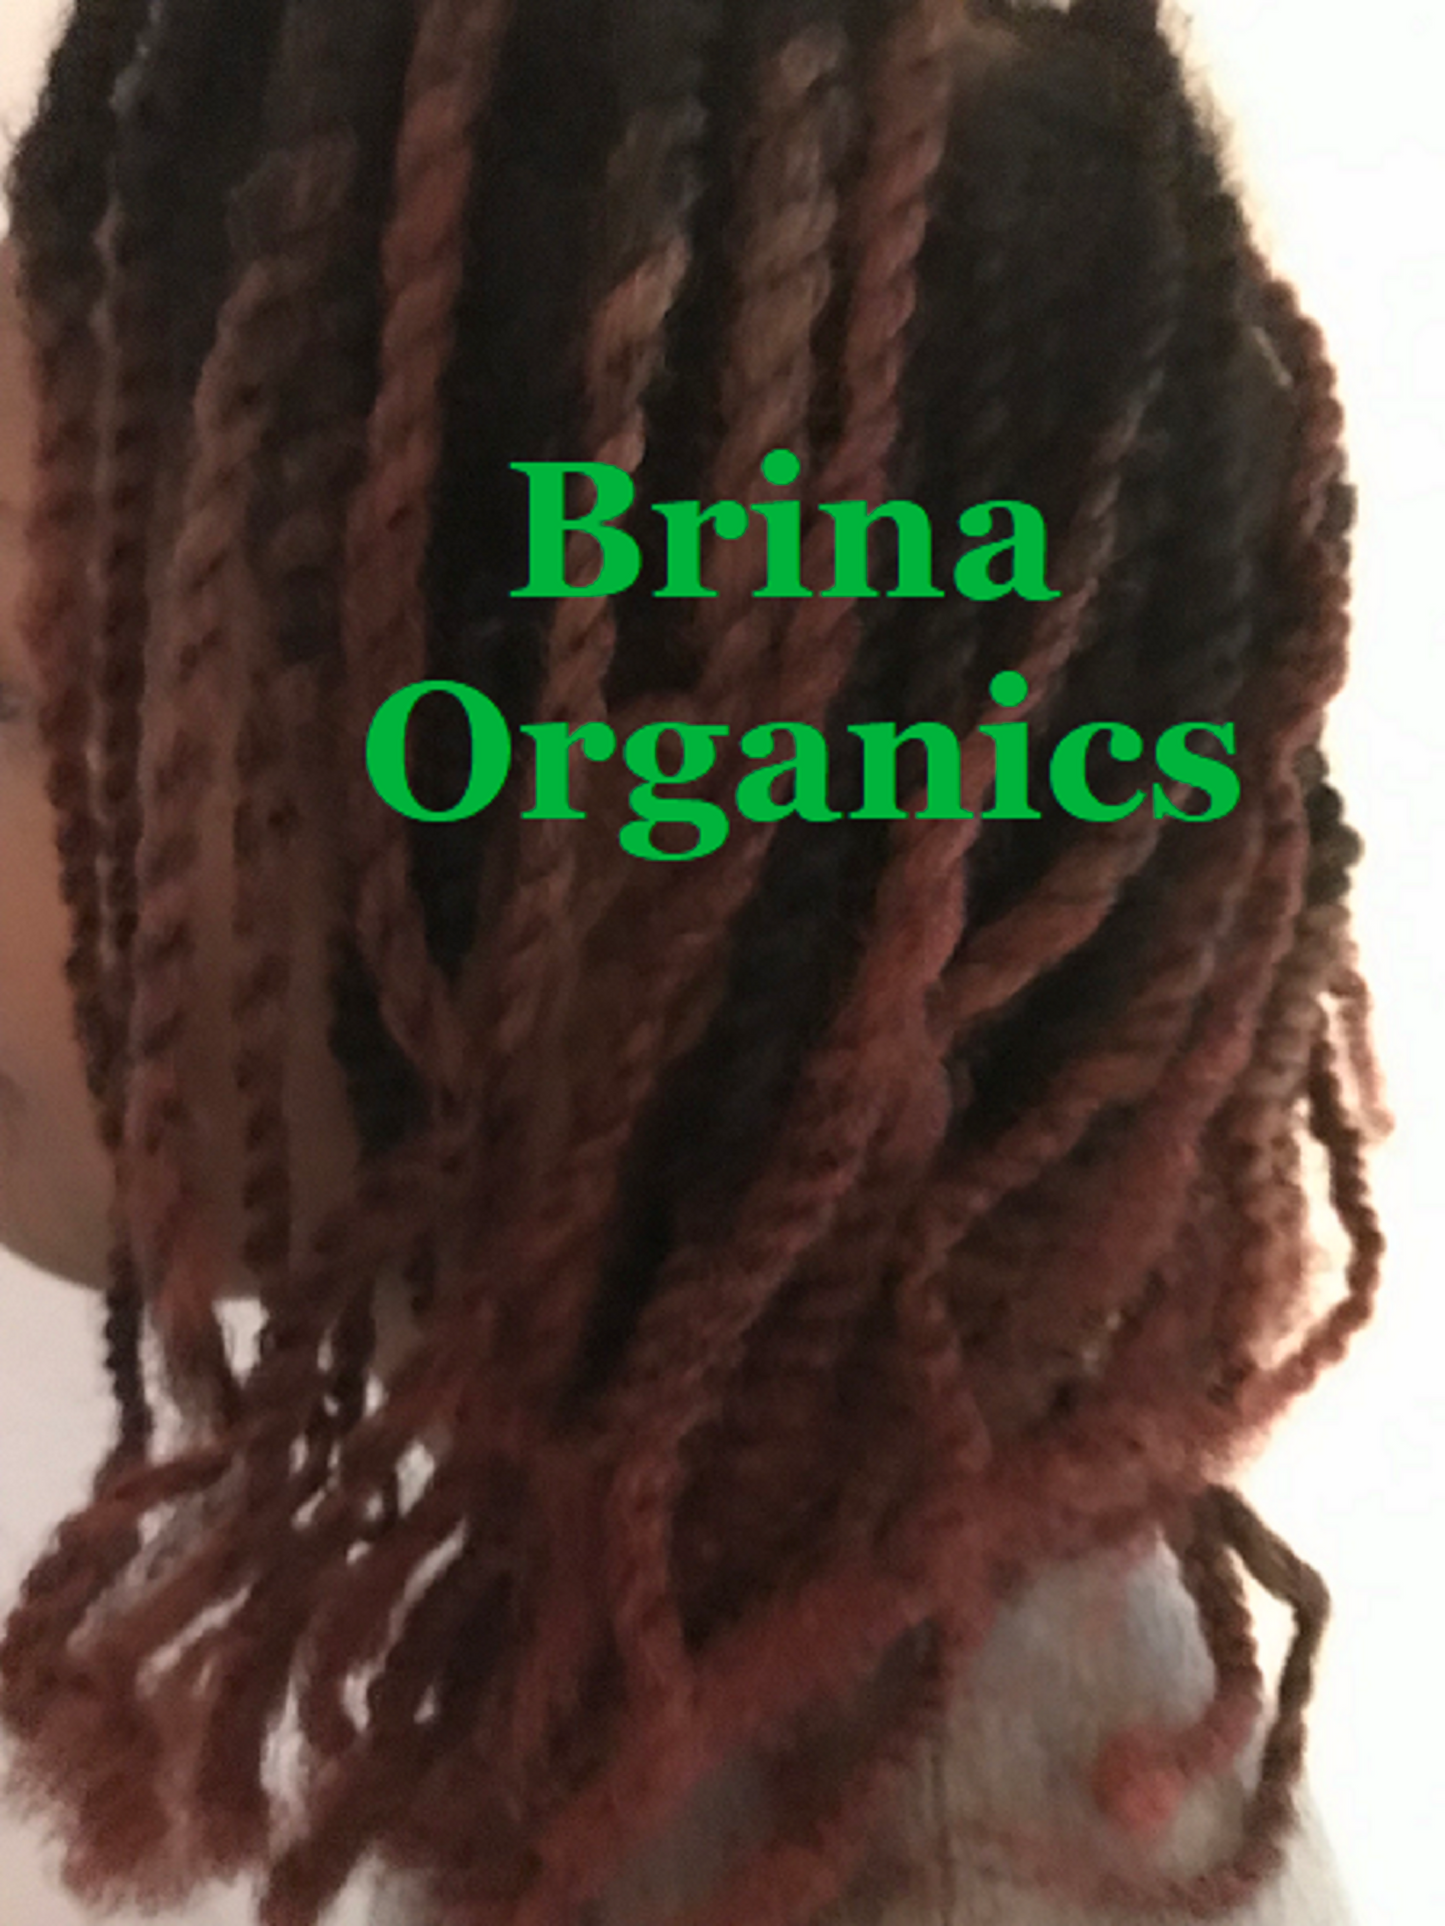 Natural Clove & Biotin Shampoo 8 oz. - 16 oz., Hair Growth Shampoo, Brina Organics